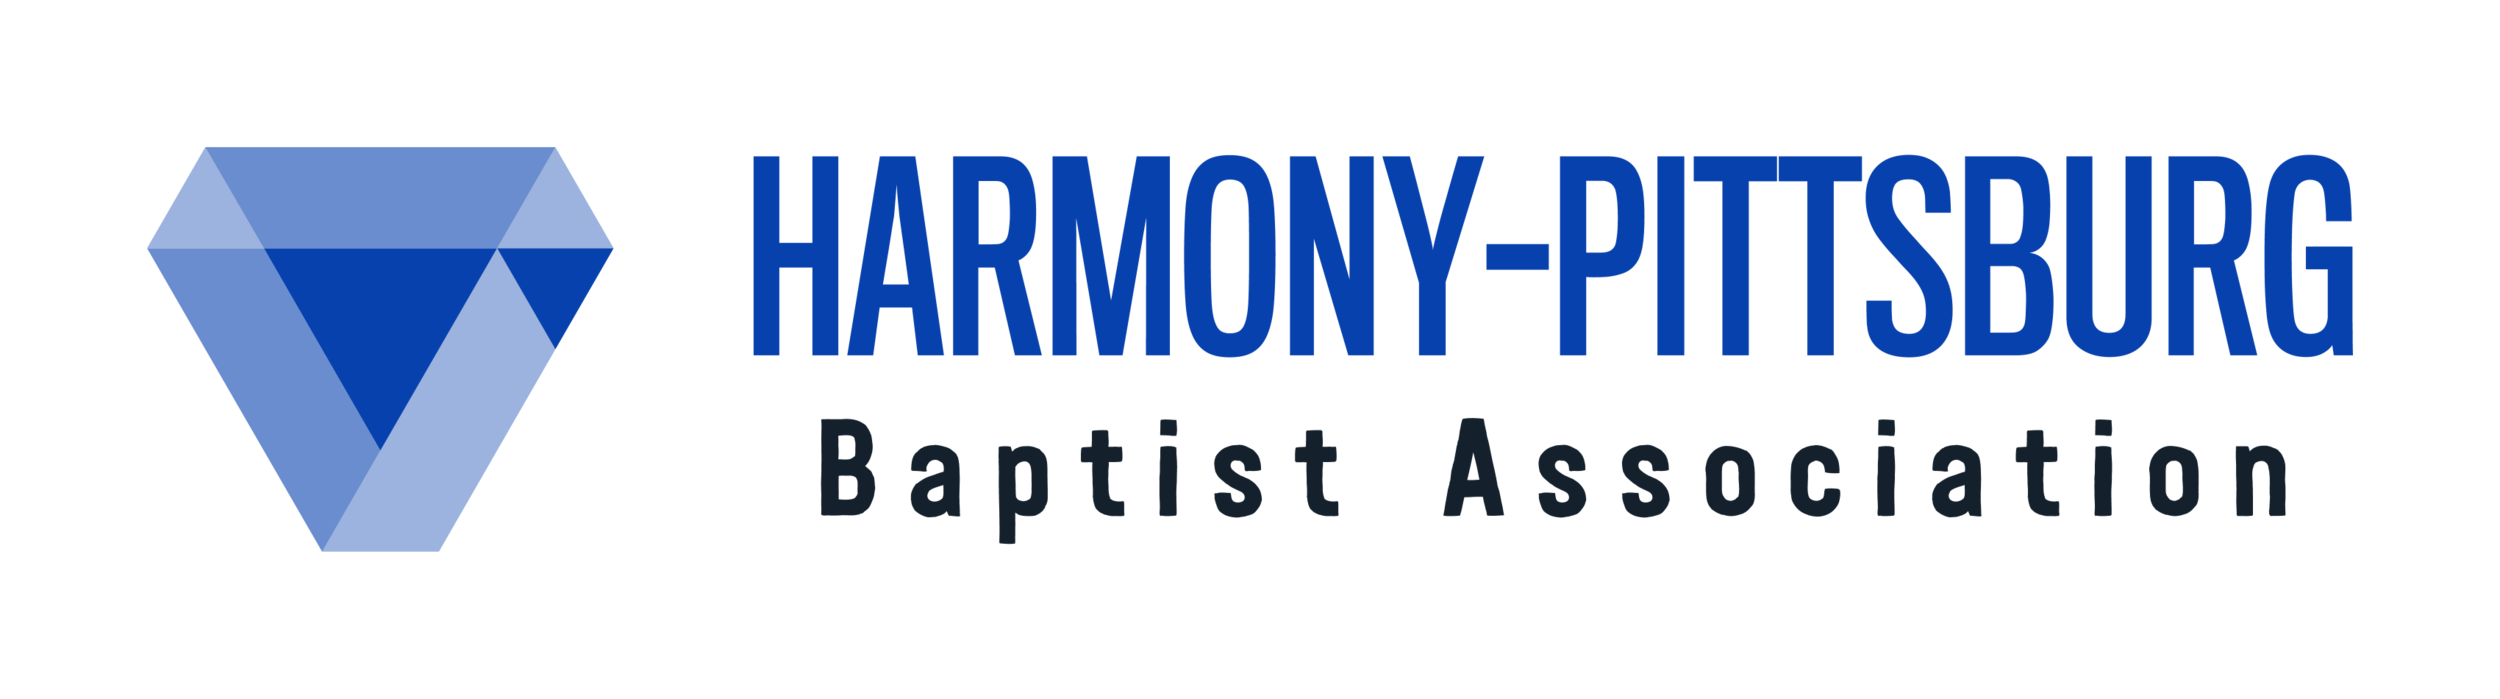 harmony-pittsburg baptist association